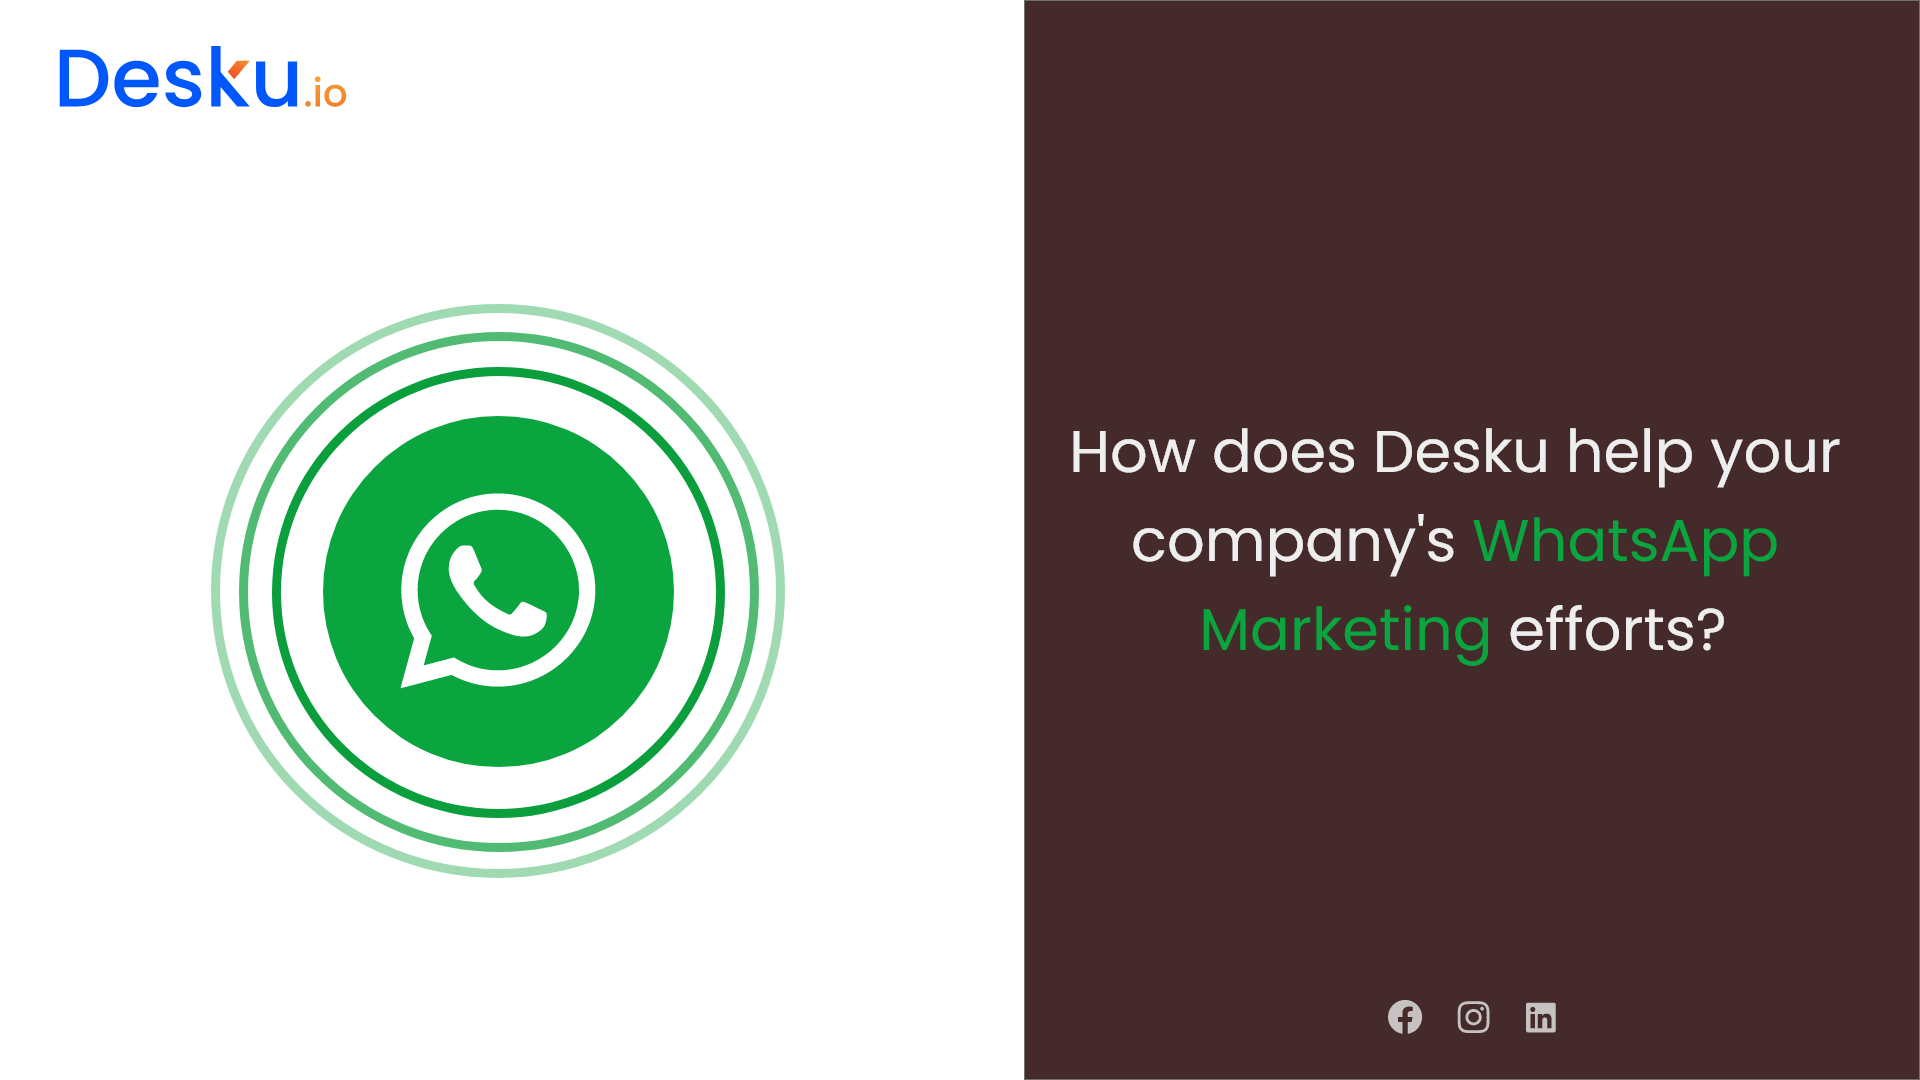 How does desku help your companys whatsapp marketing efforts